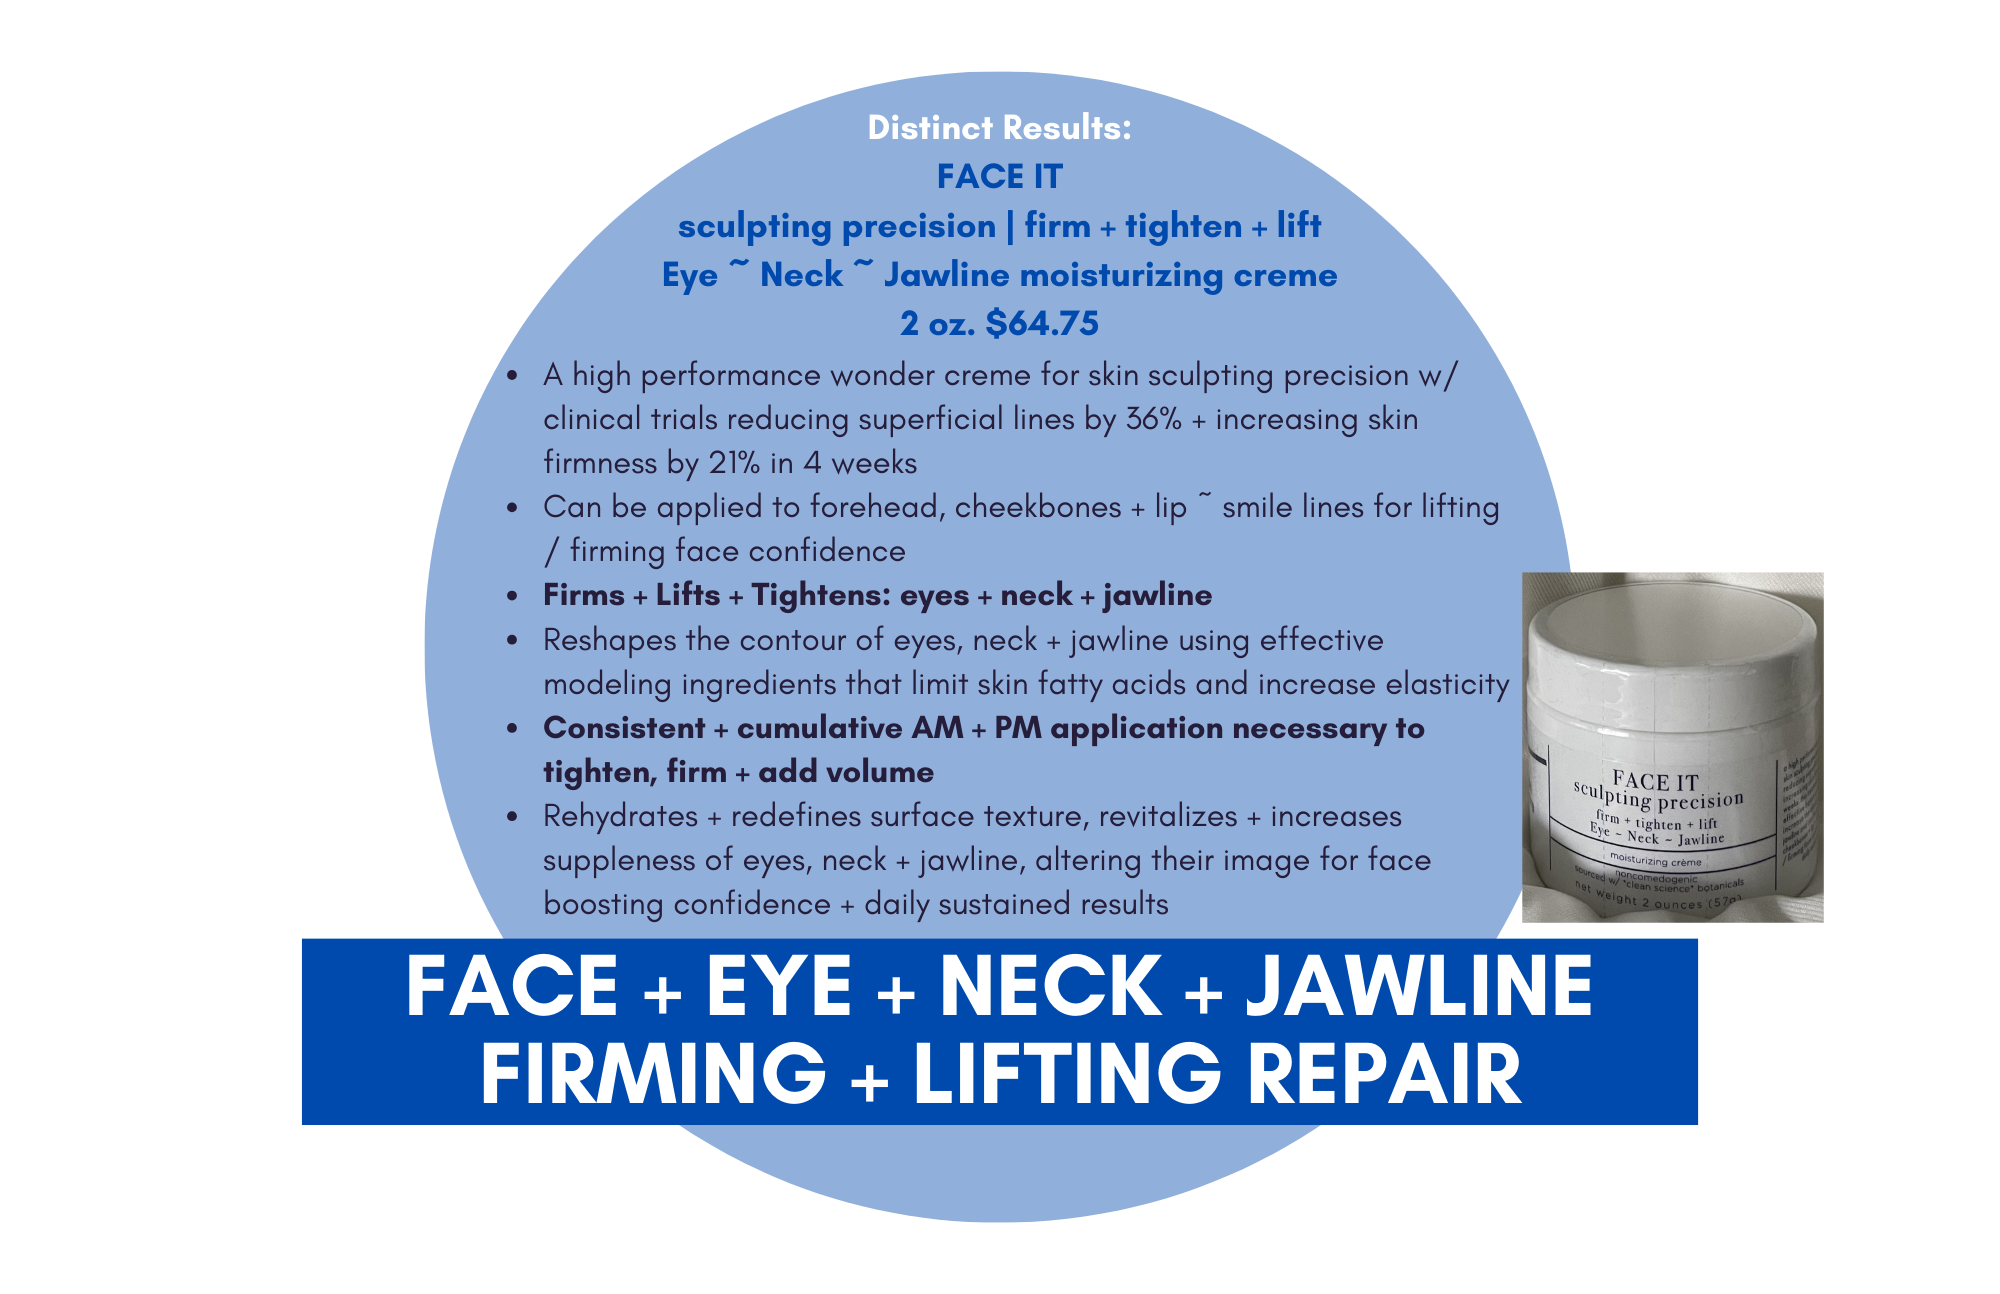 Eye + Neck + Jawline Firming + Lifting Repair